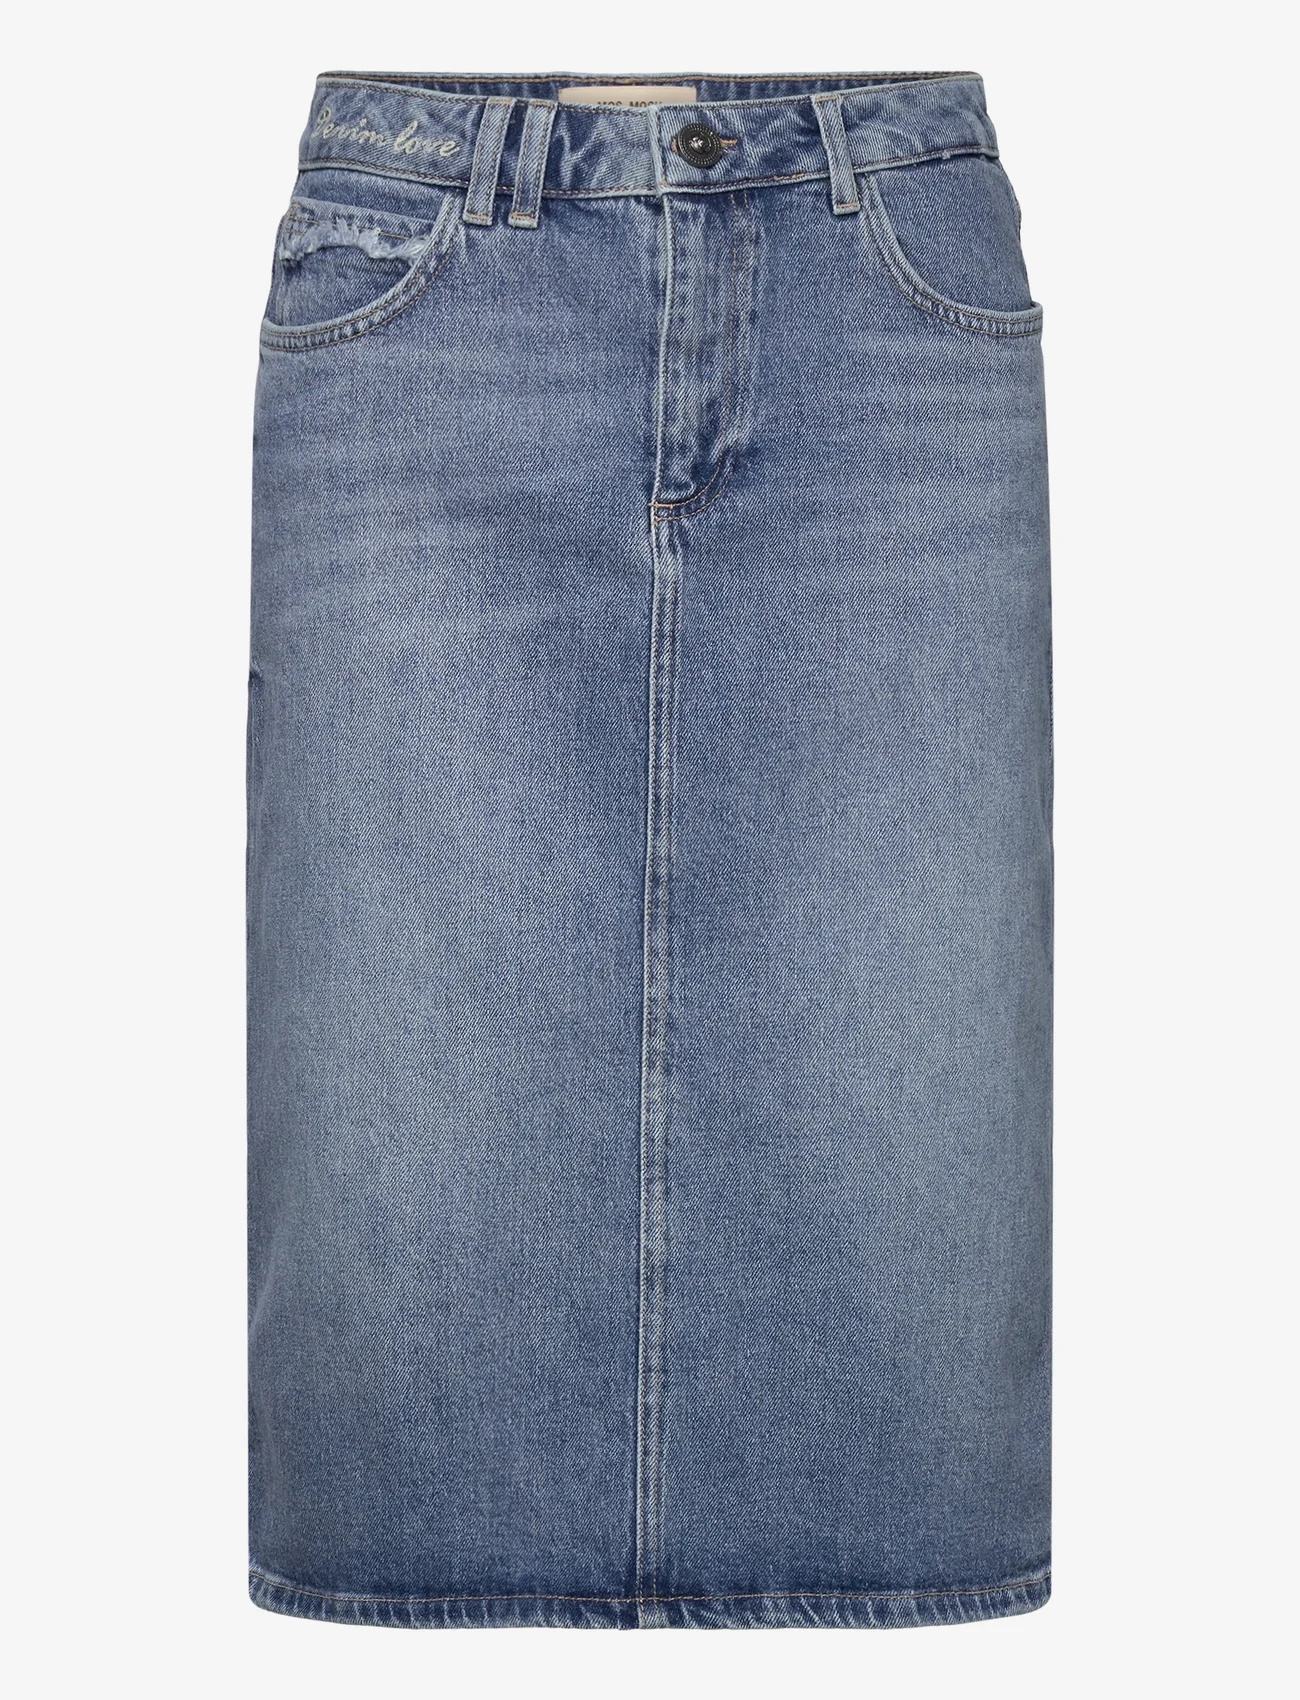 MOS MOSH Selma Modra Skirt (Blue), (77.66 €) | Large selection of ...